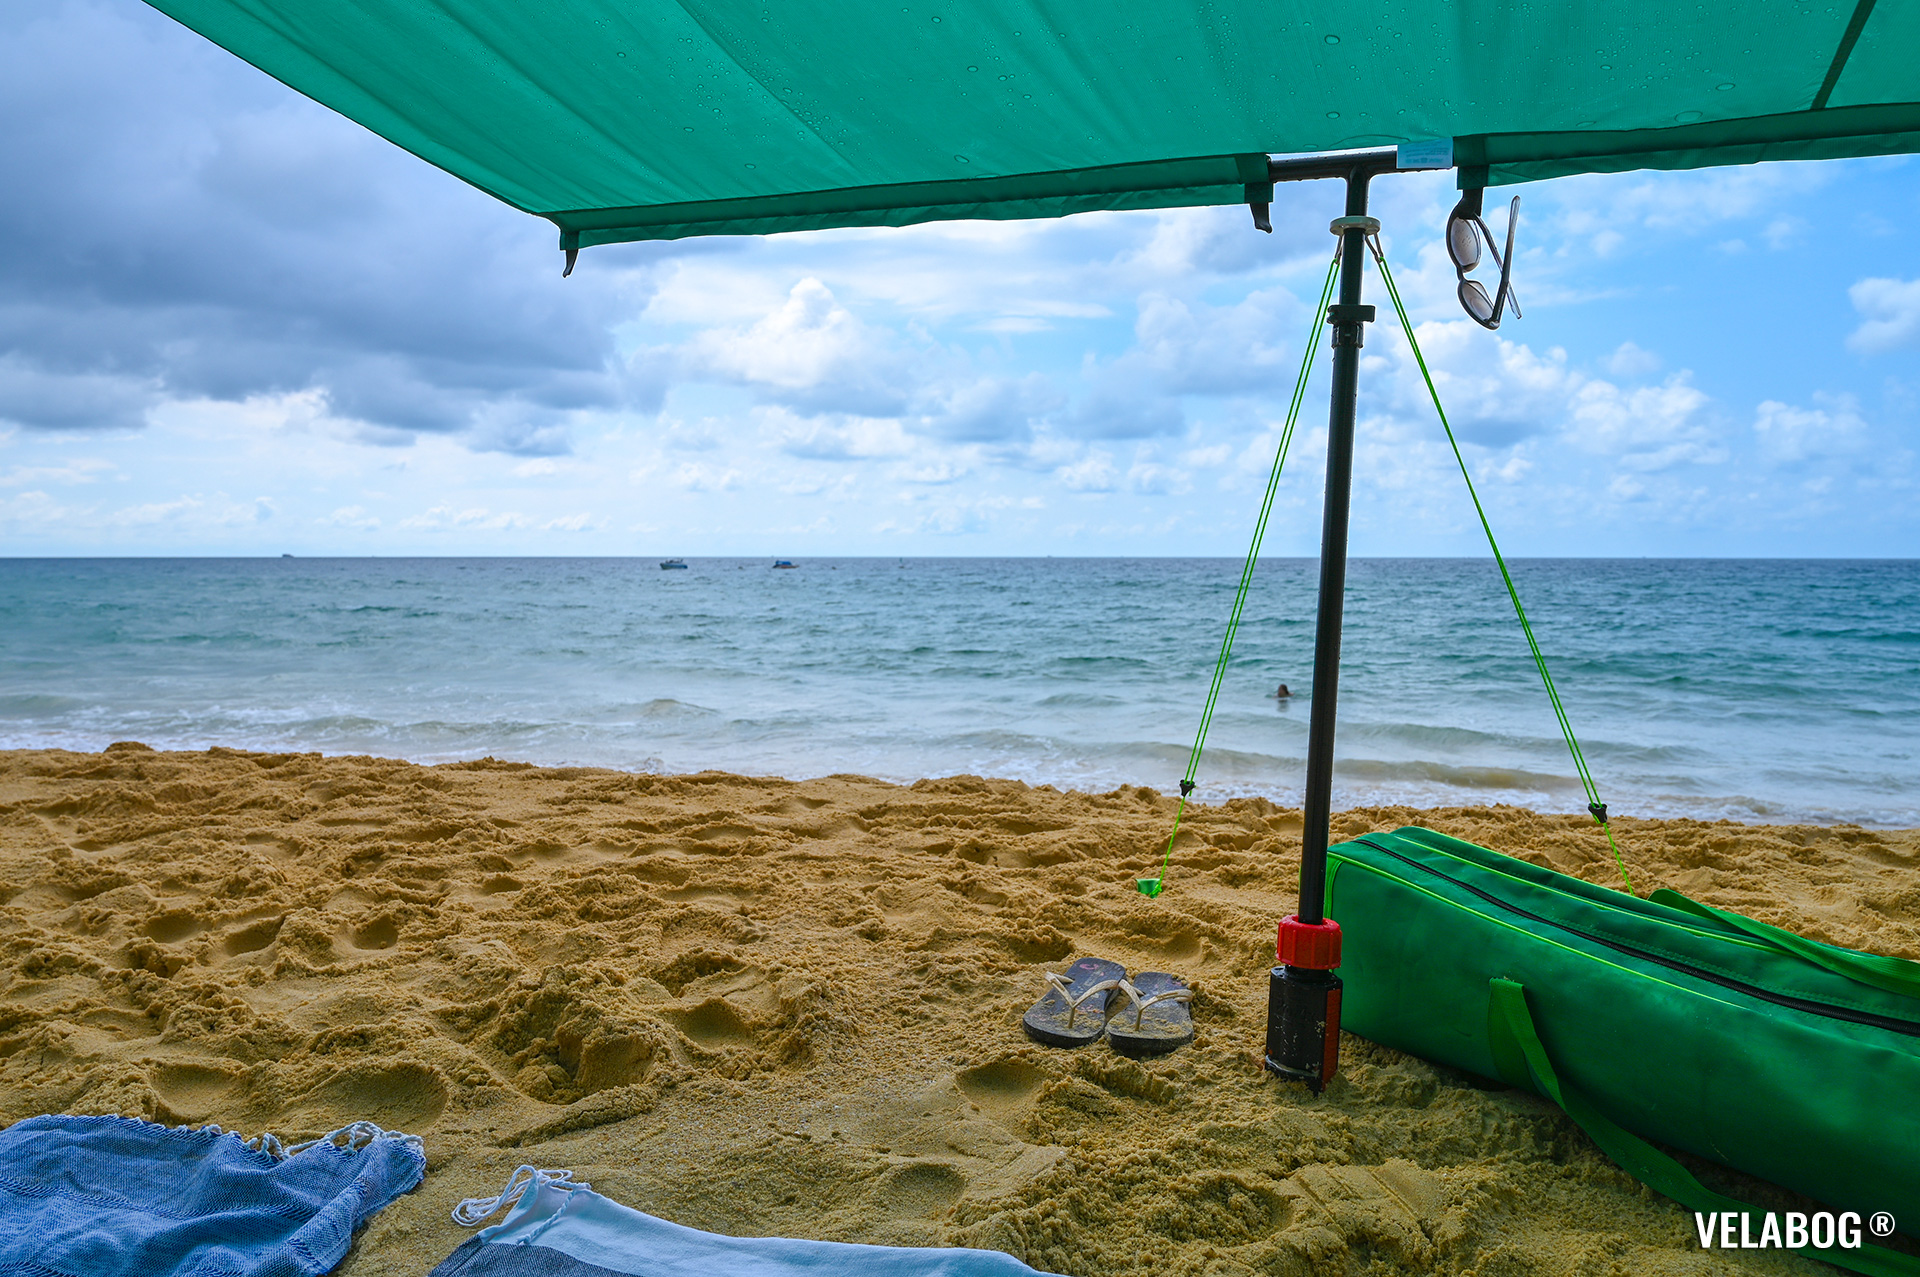 Beach sun sail Velabog Breeze, green.  Best beach canopy tent, best shelter on the beach also by rain. Setup option for no, light or gusty wind. Bottom view. Details.